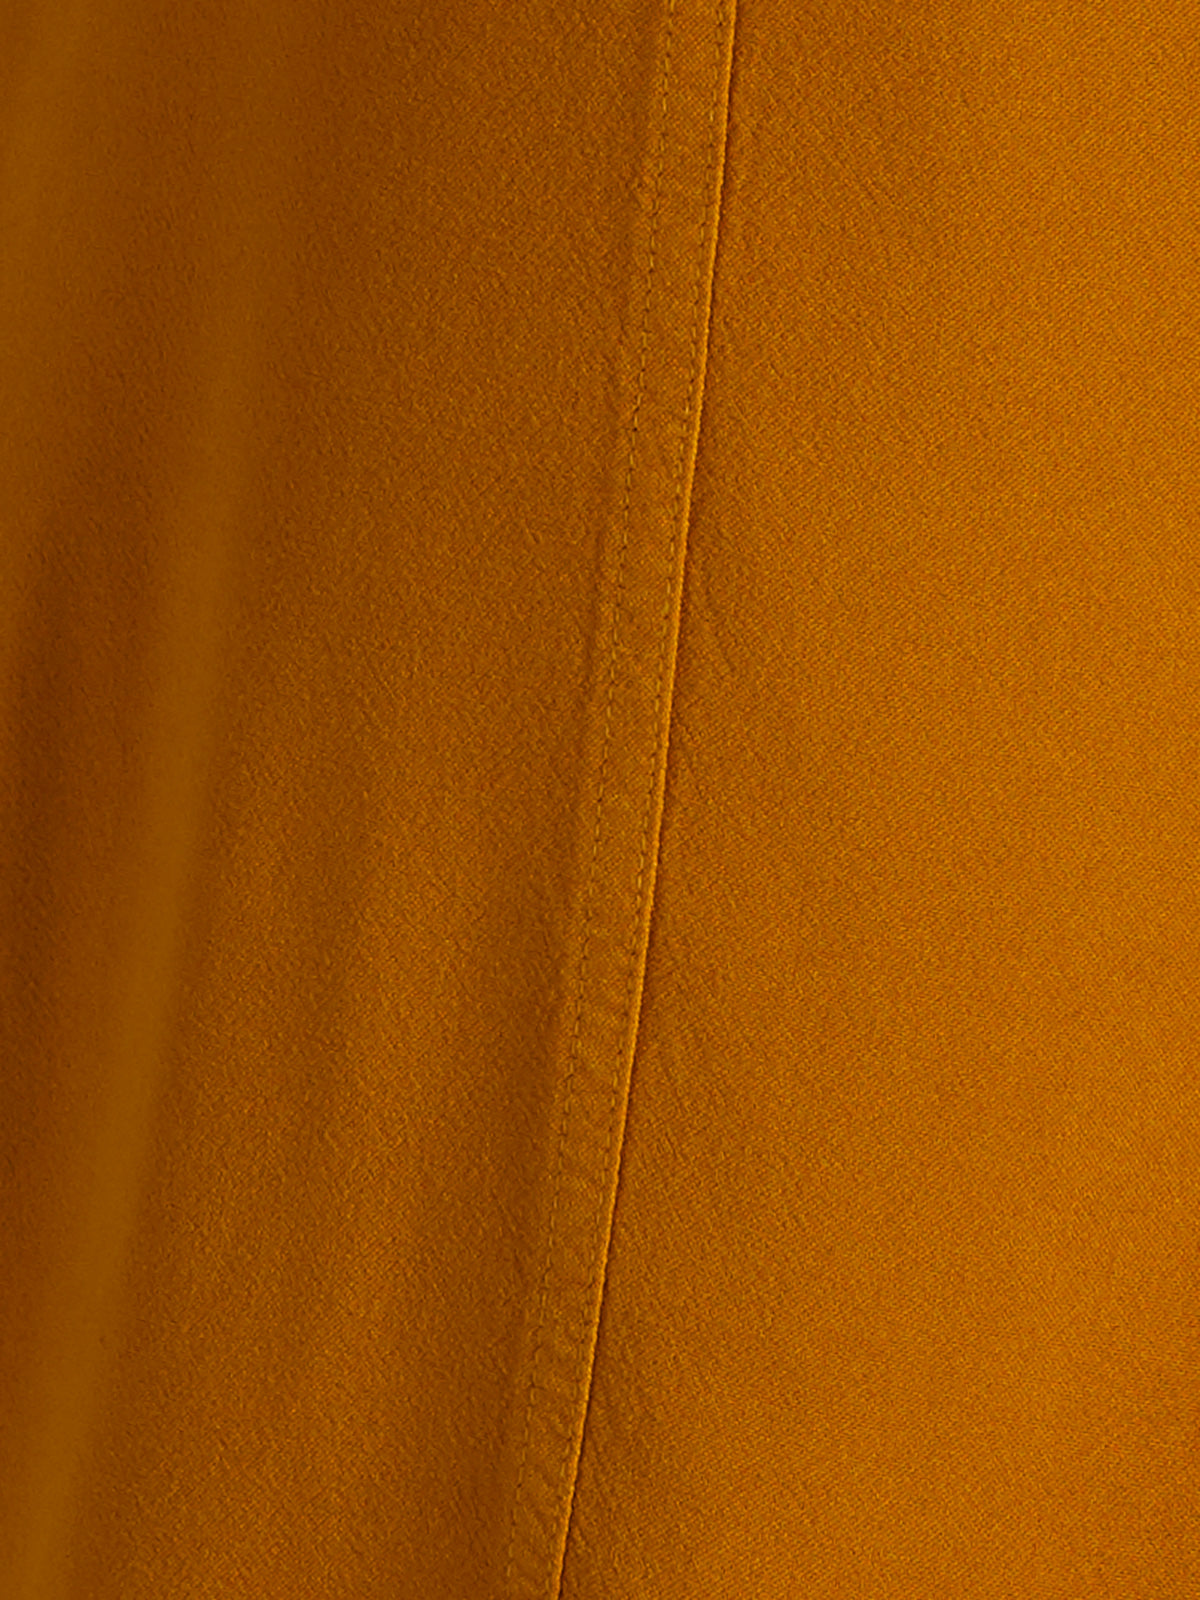 Men Half Placket Mandarin Collar Viscose Shirt / Kurta